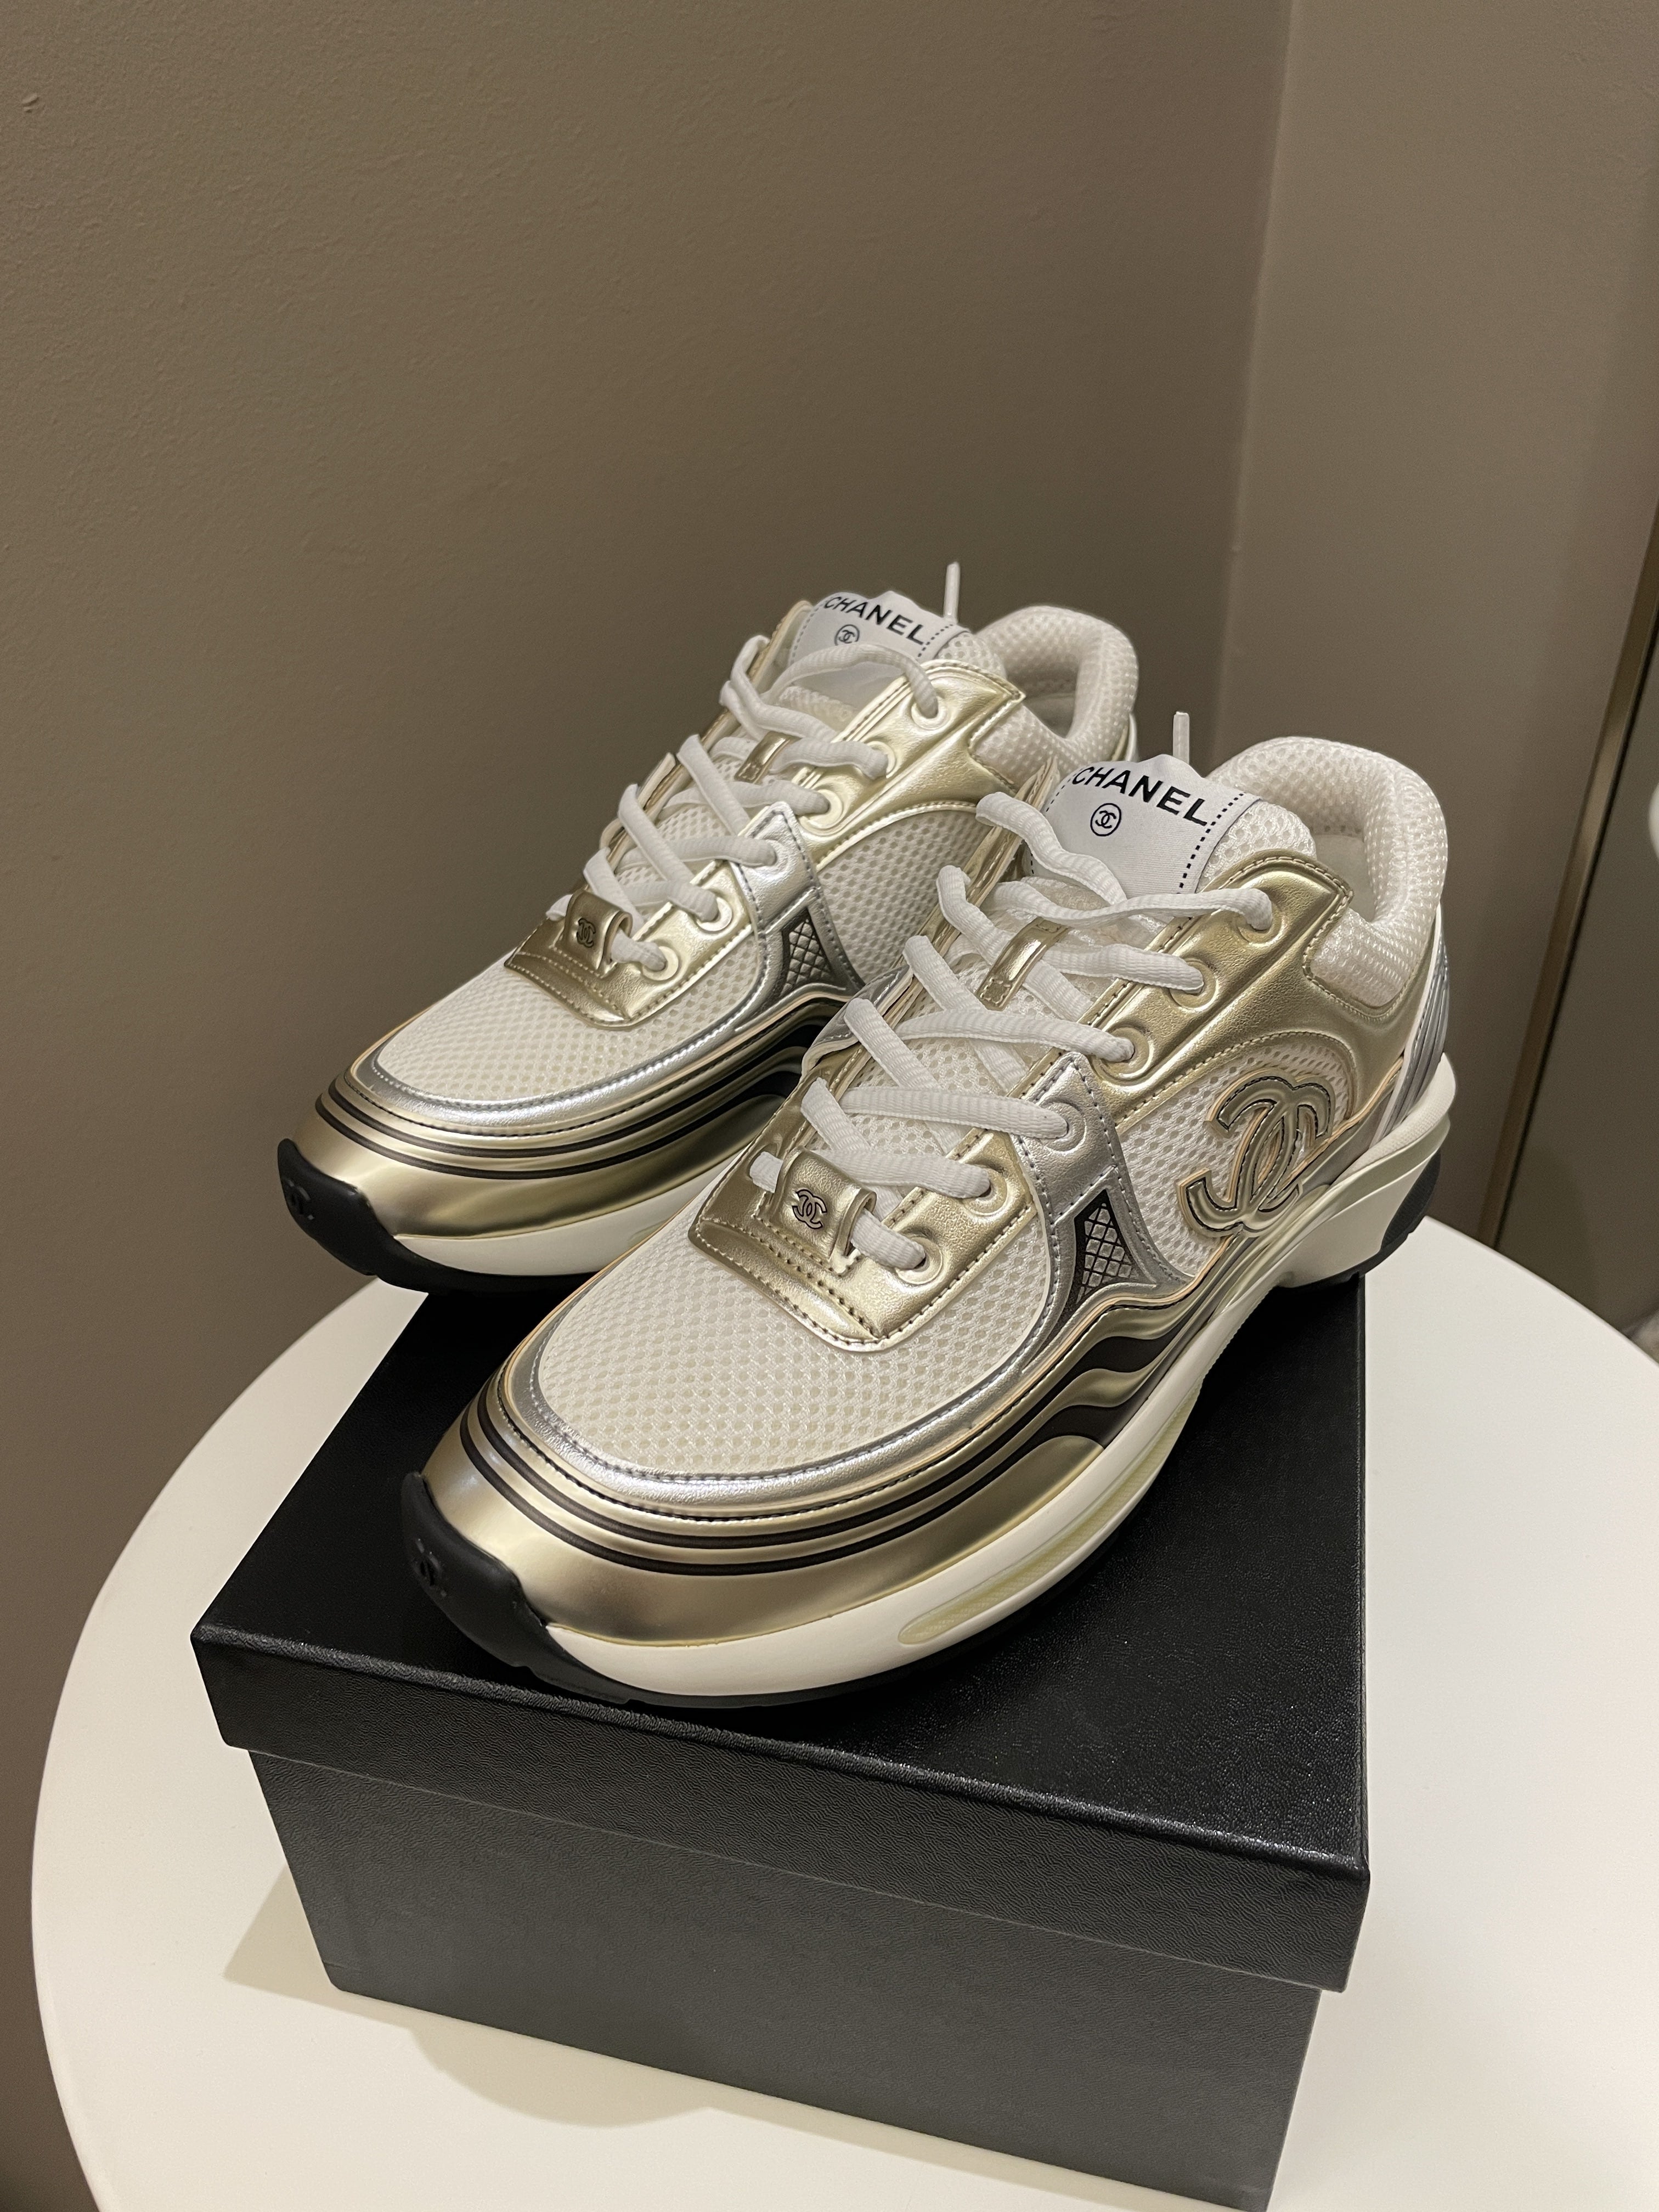 Chanel 23C Sneaker
Gold Size 40